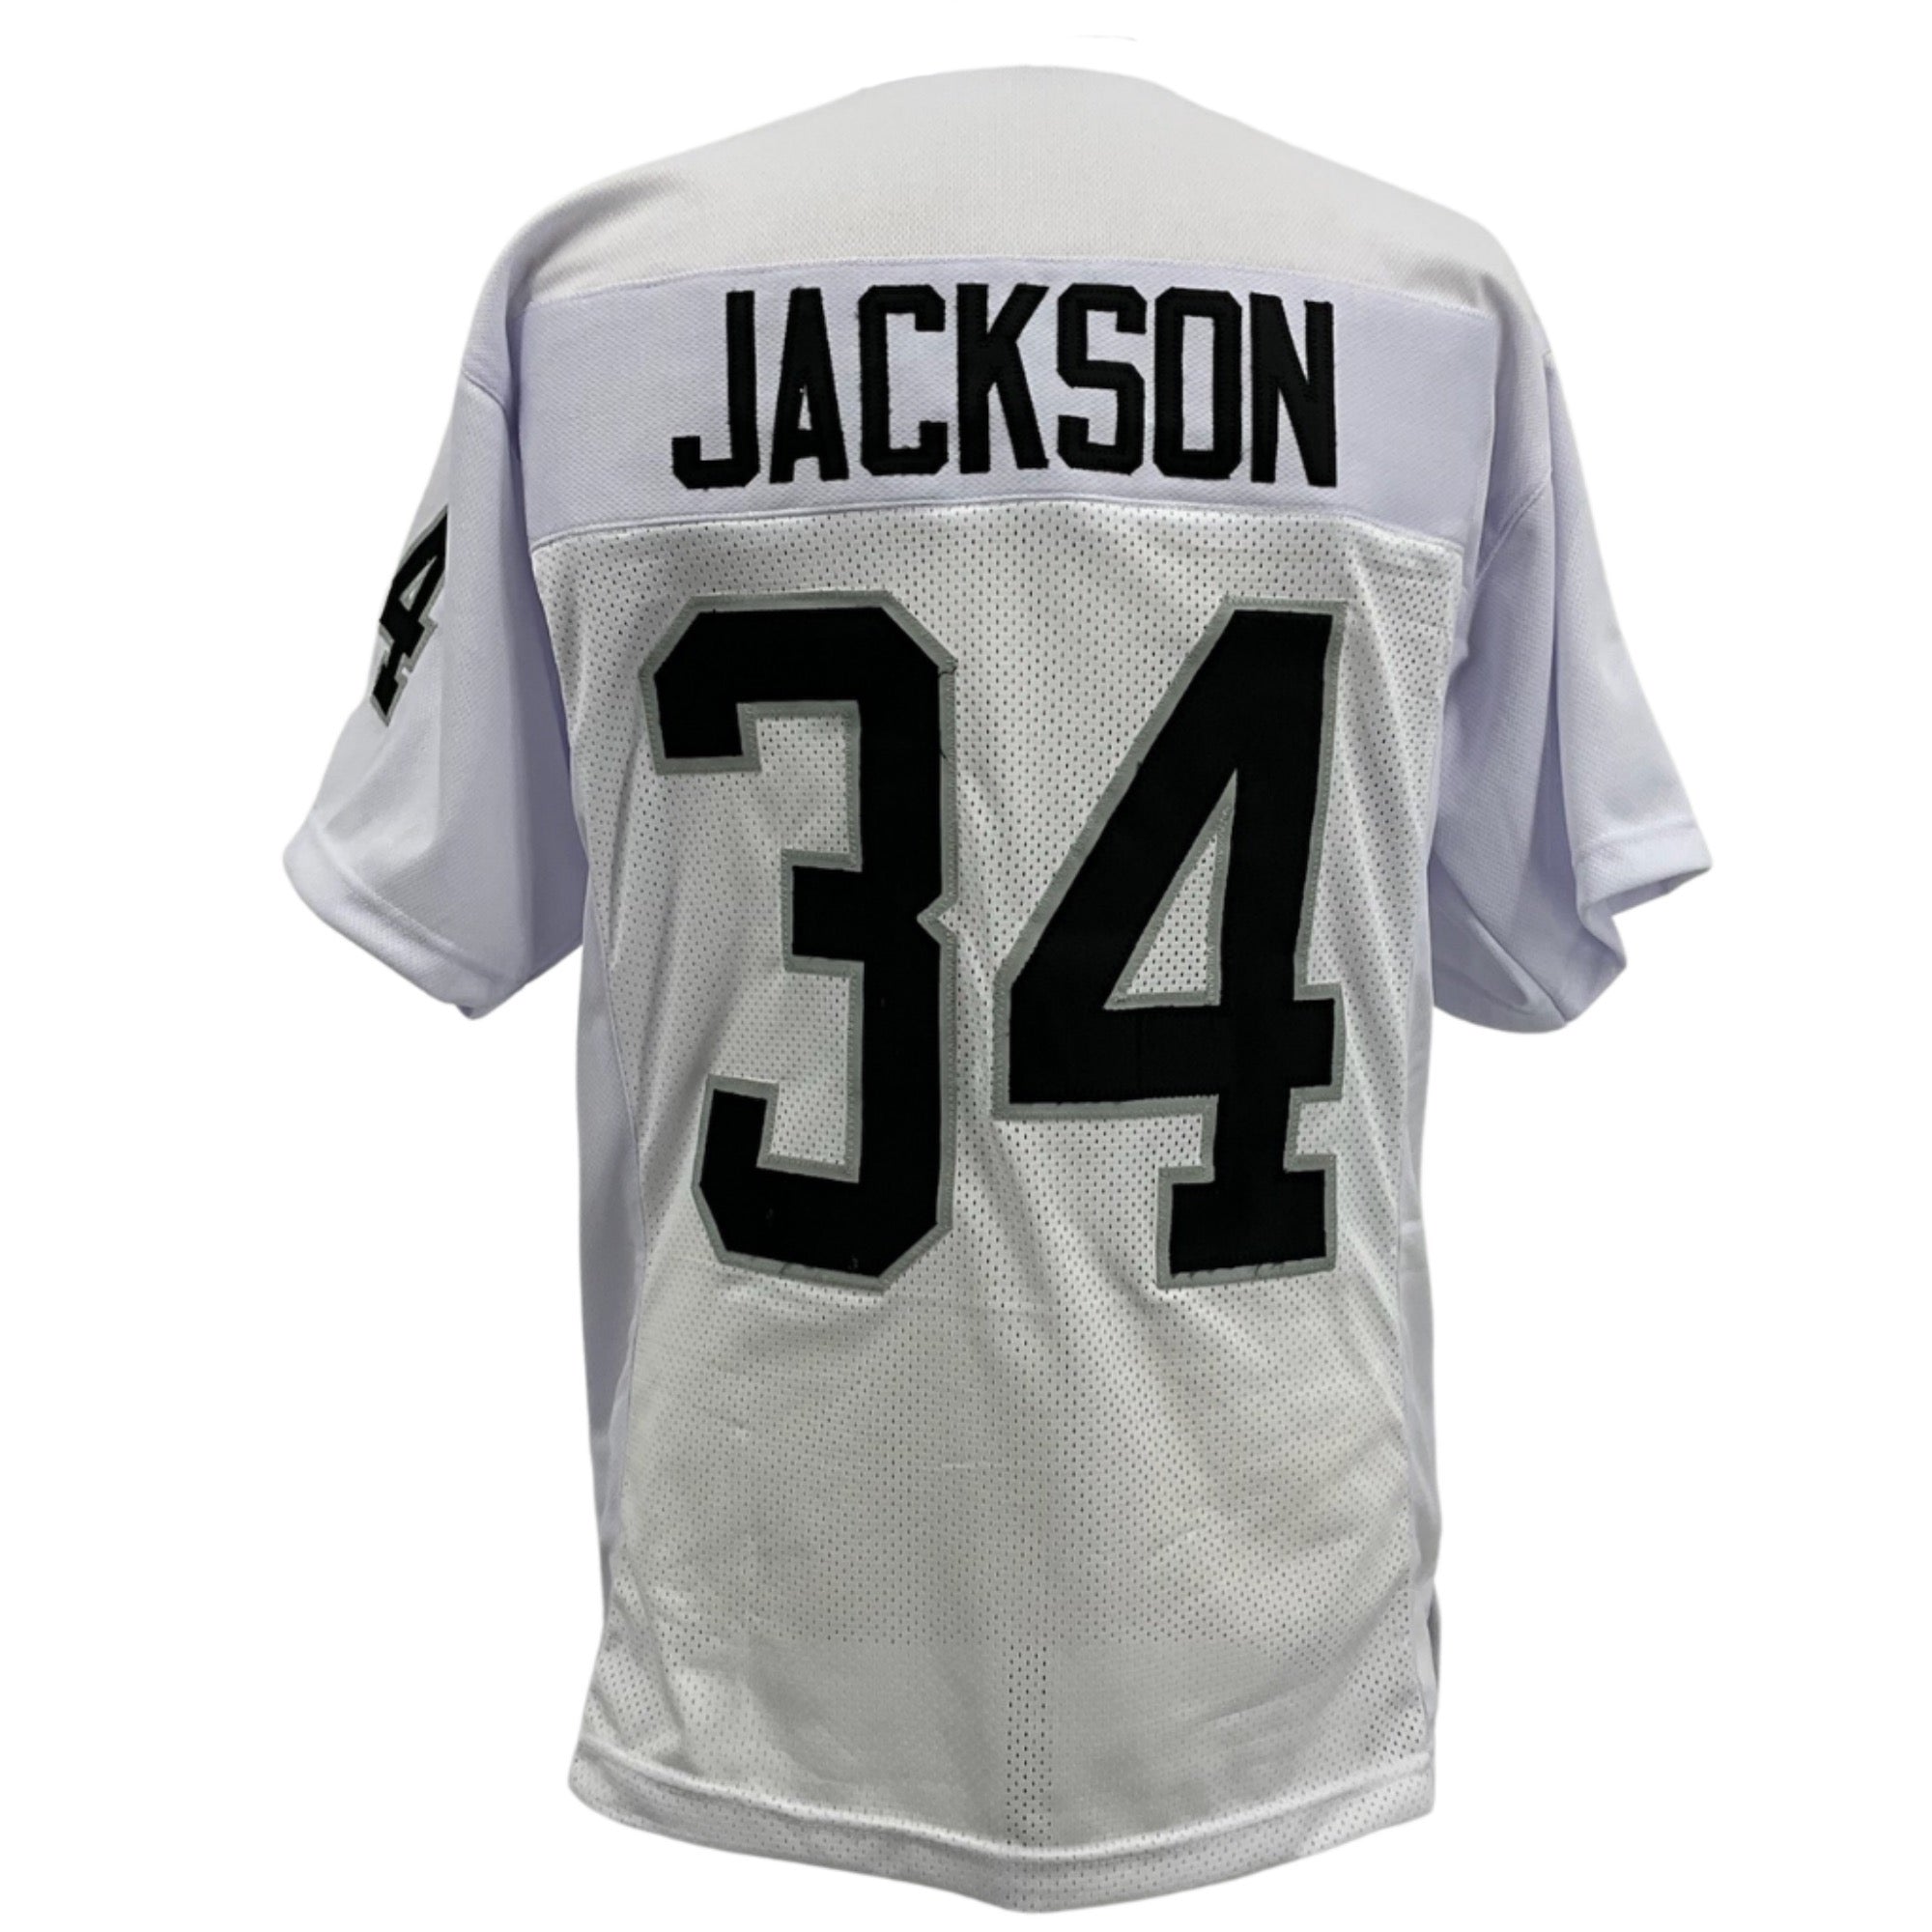 BO JACKSON Los Angeles Raiders WHITE Jersey B/SL M-5XL Unsigned Sewn Stitch